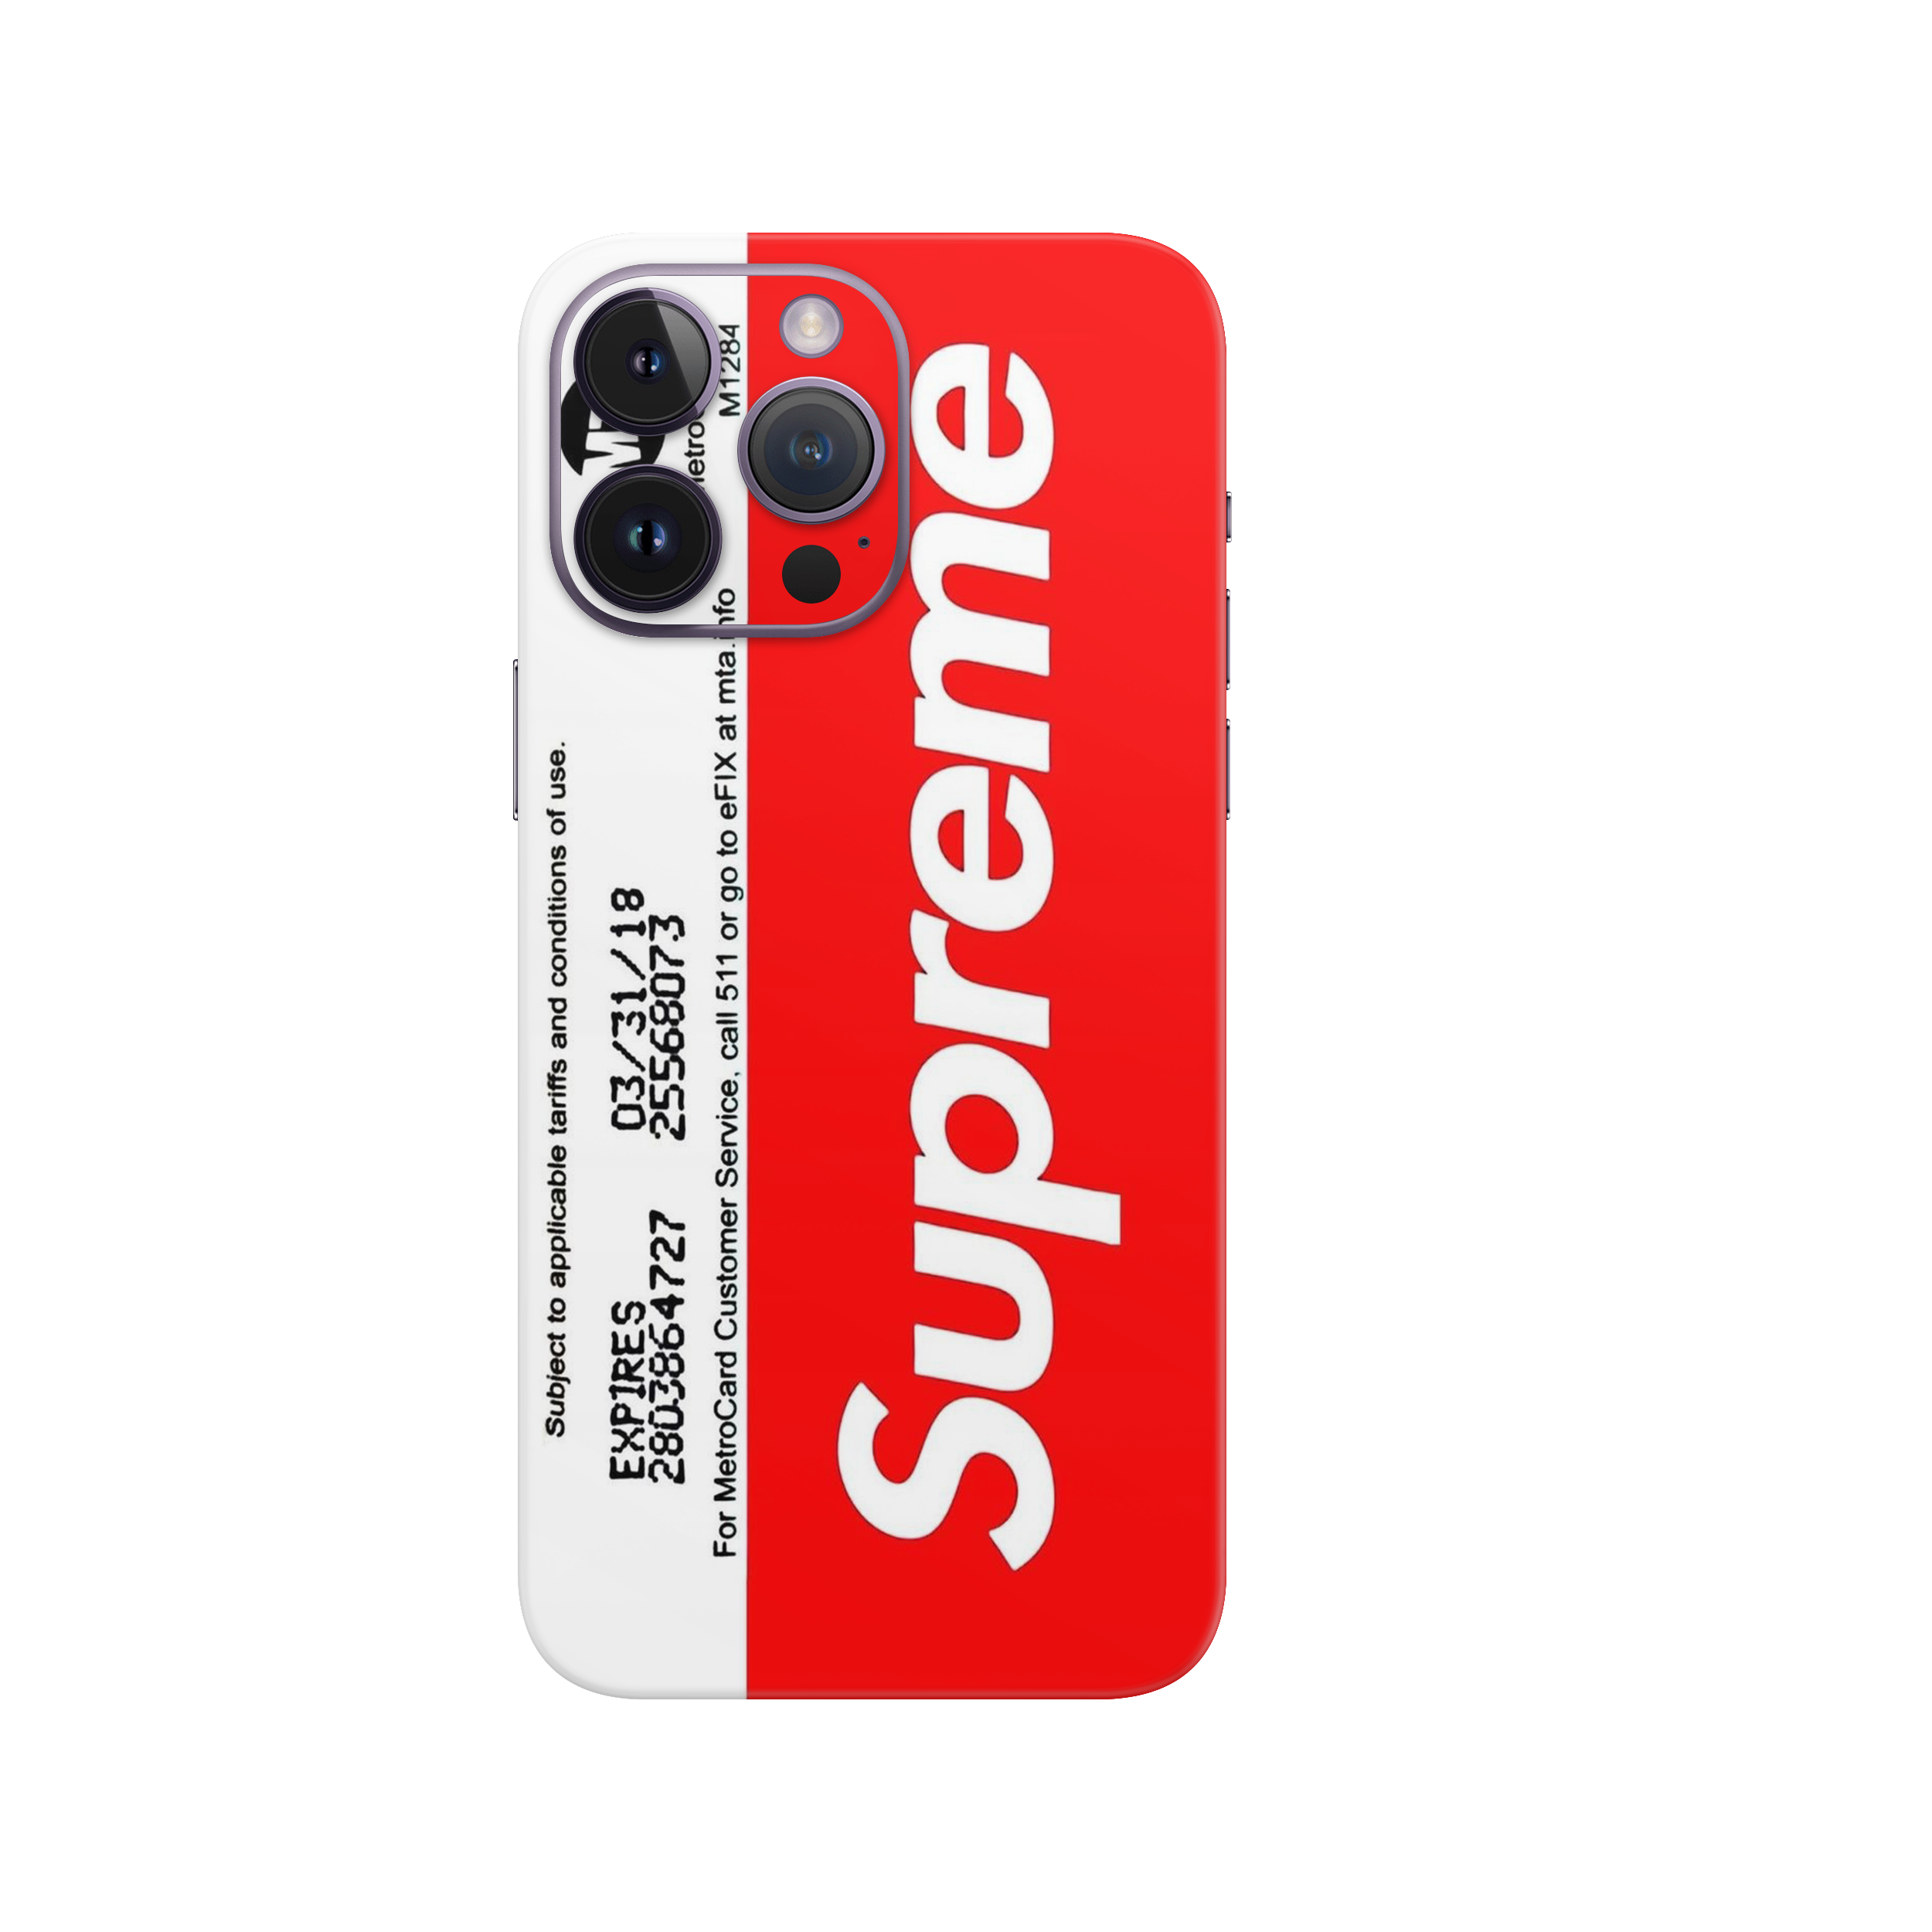 Supreme iPhone SE Back Skin Wrap